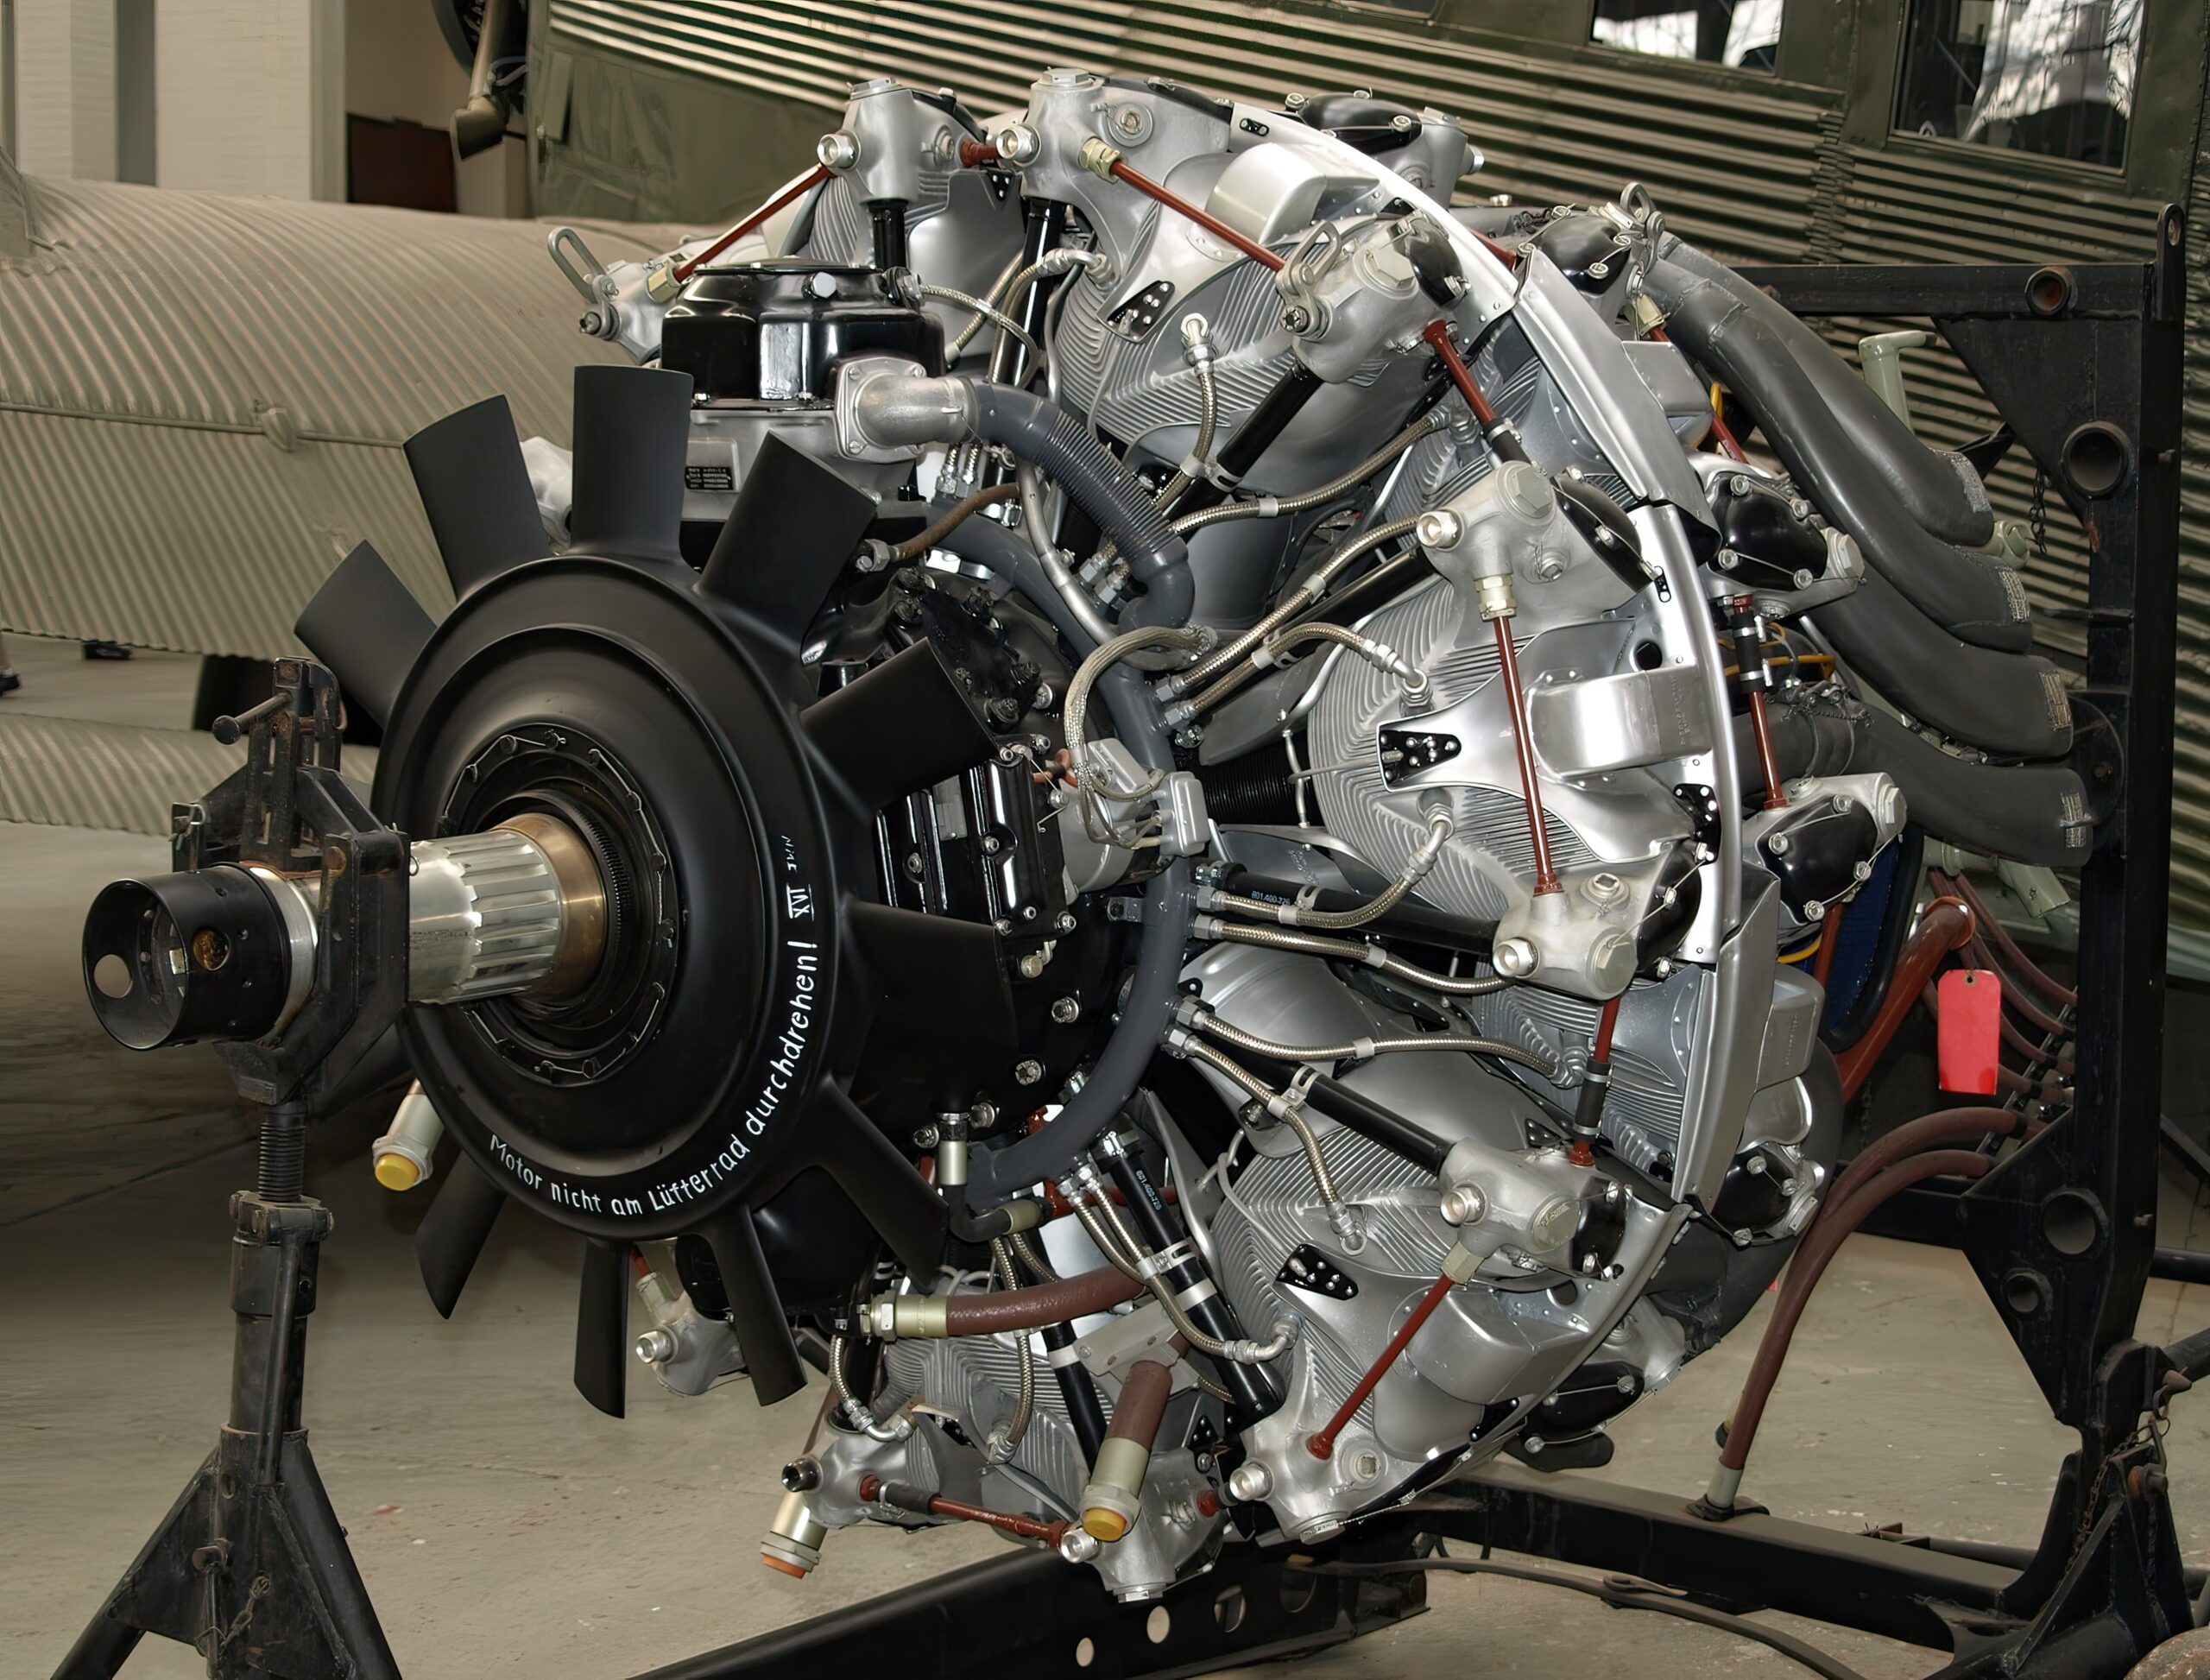 BMW 801D aero engine